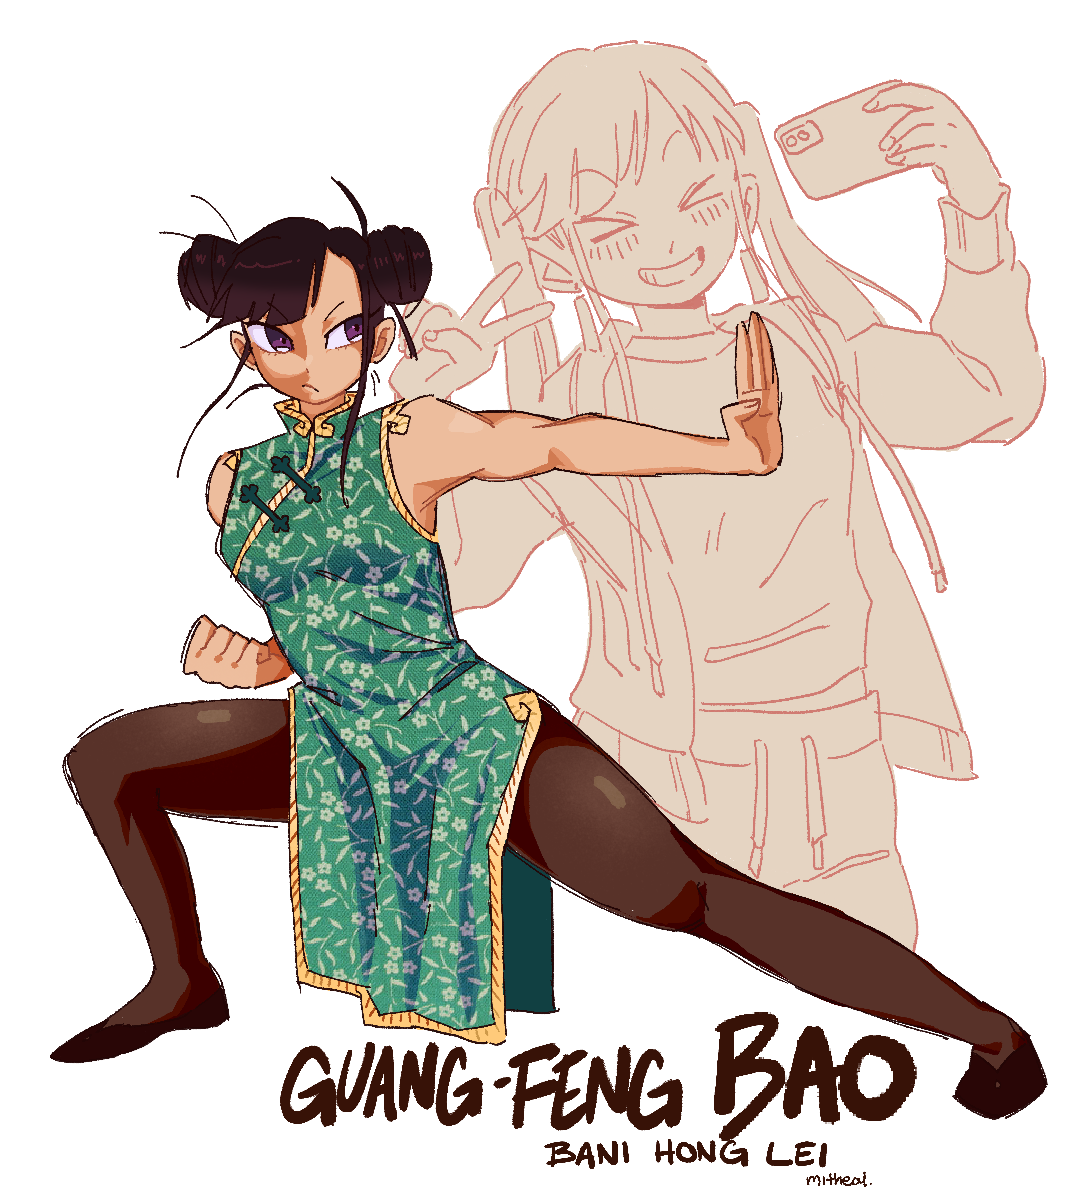 Art of original character Guang-Feng Bao.